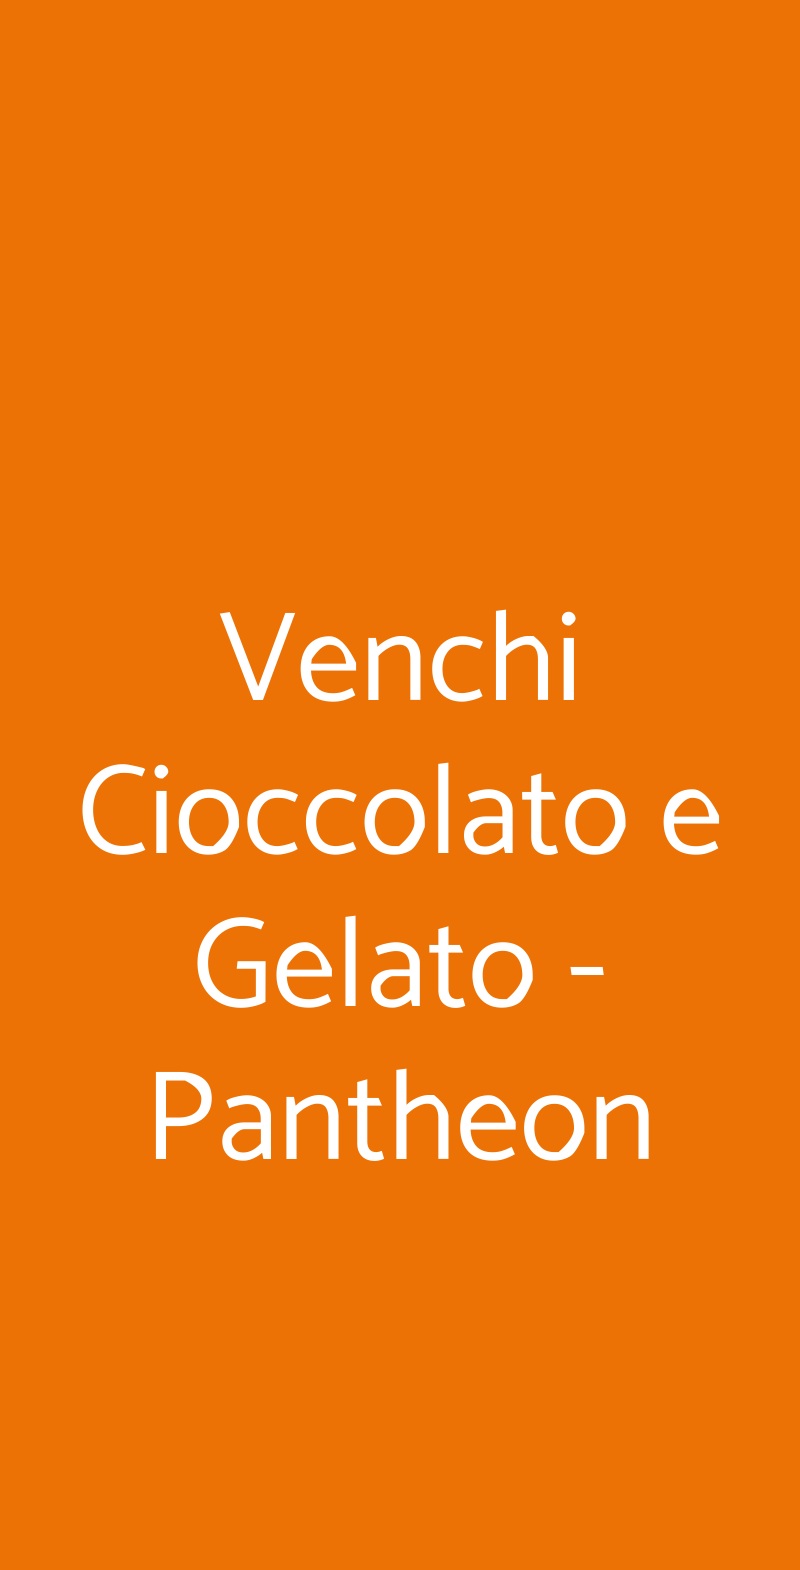 Venchi Cioccolato e Gelato - Pantheon Roma menù 1 pagina